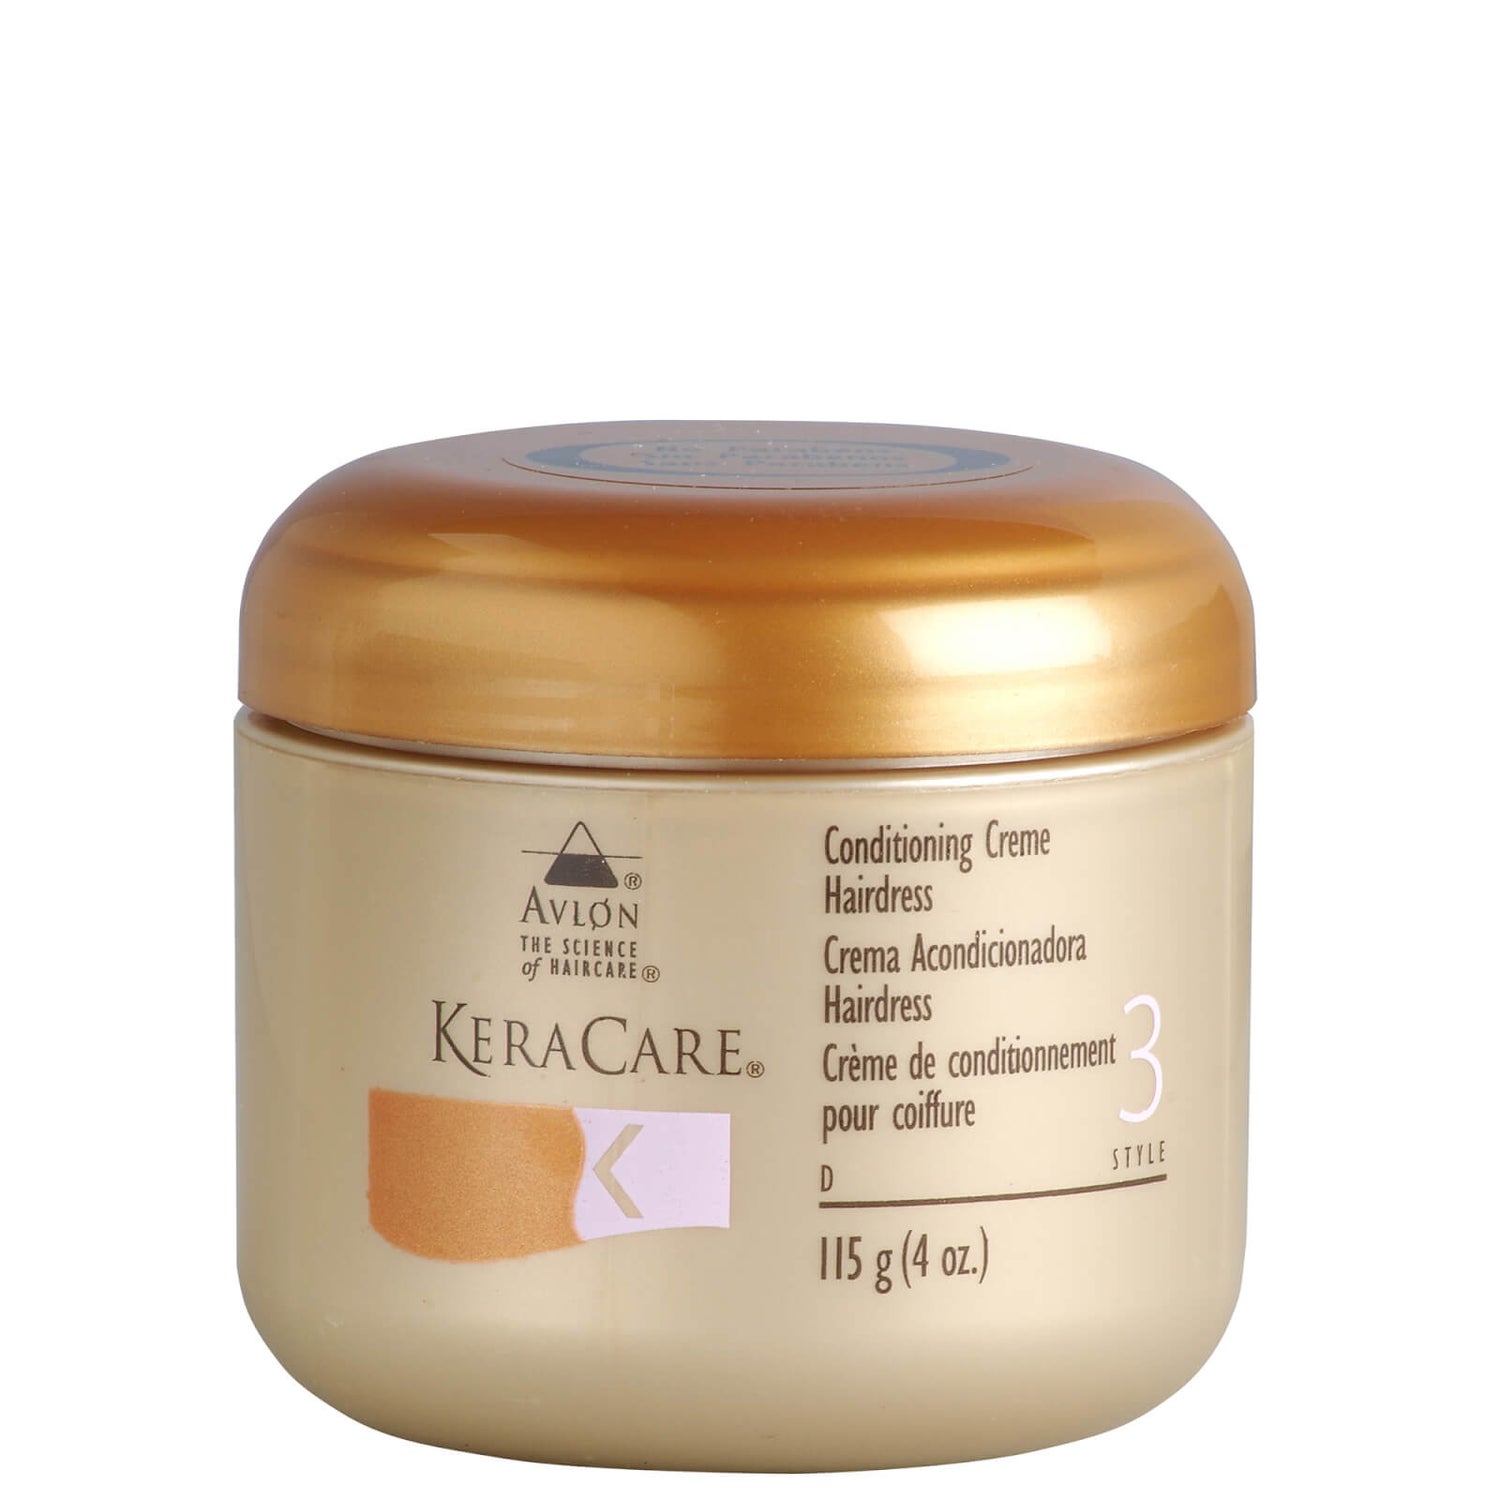 KeraCare Crème Hairdress 115g